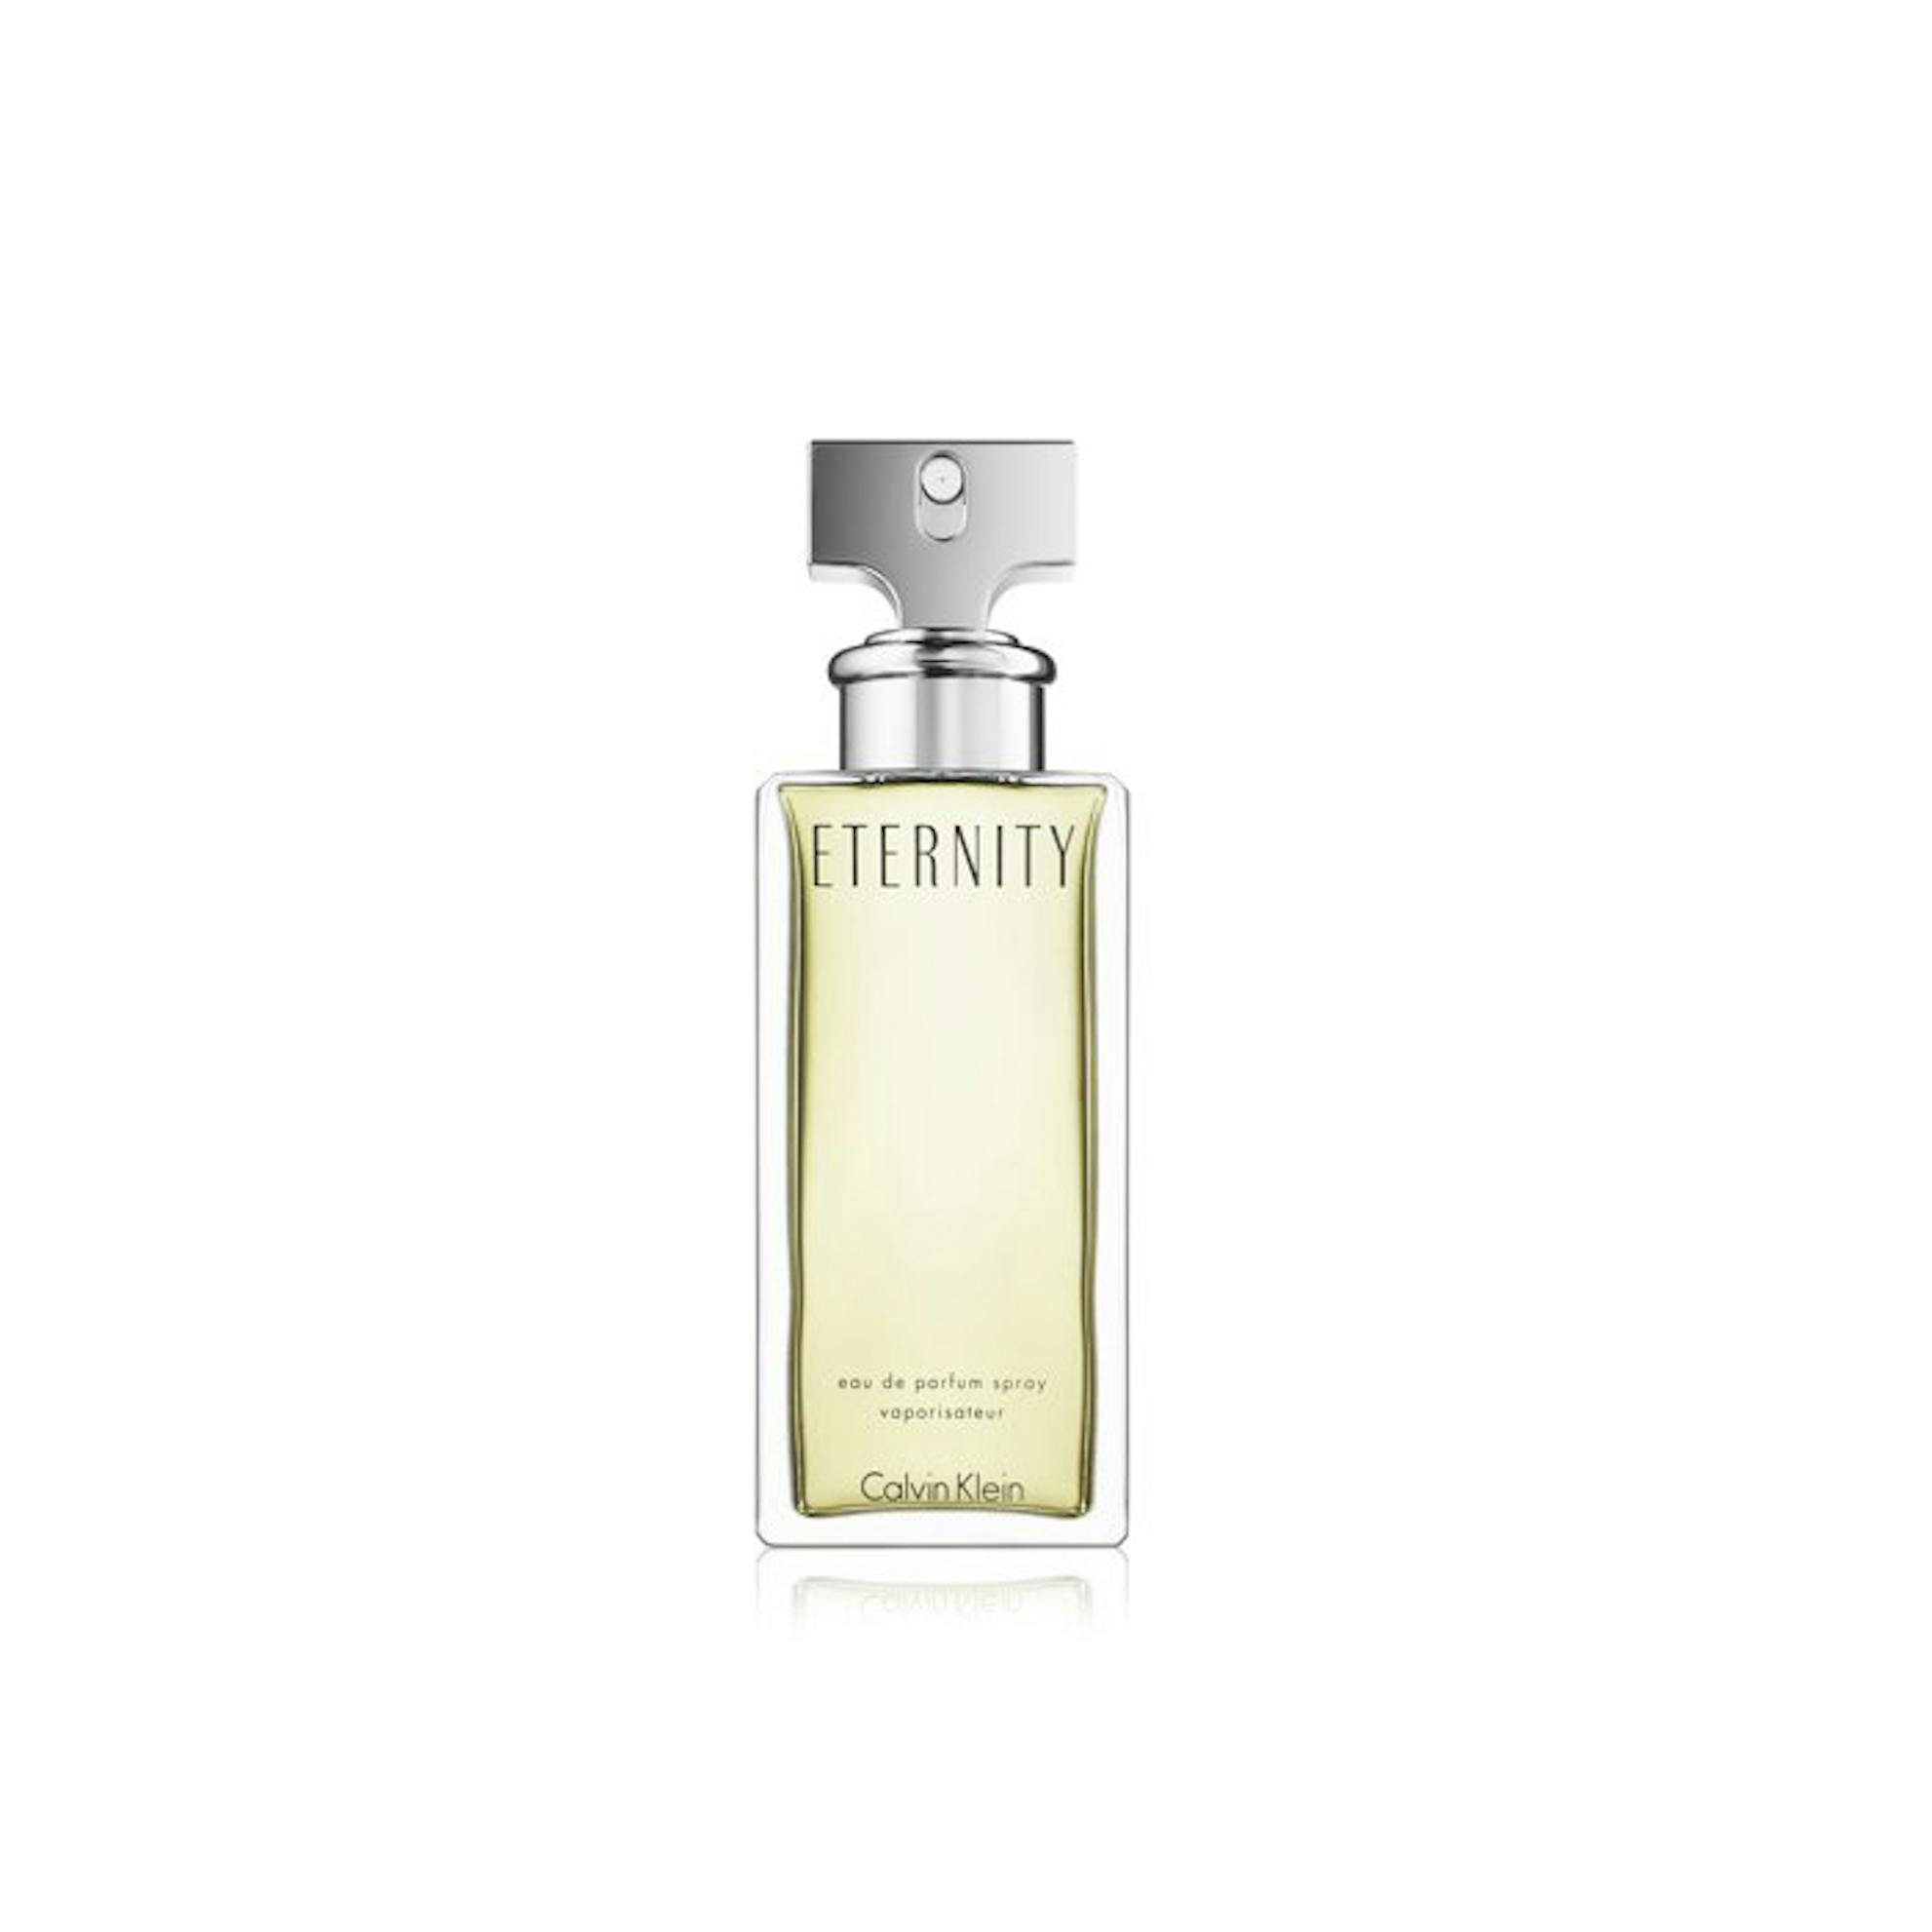 Klein Eternity Eau | 15ml | The Fragrance Shop The Fragrance Shop